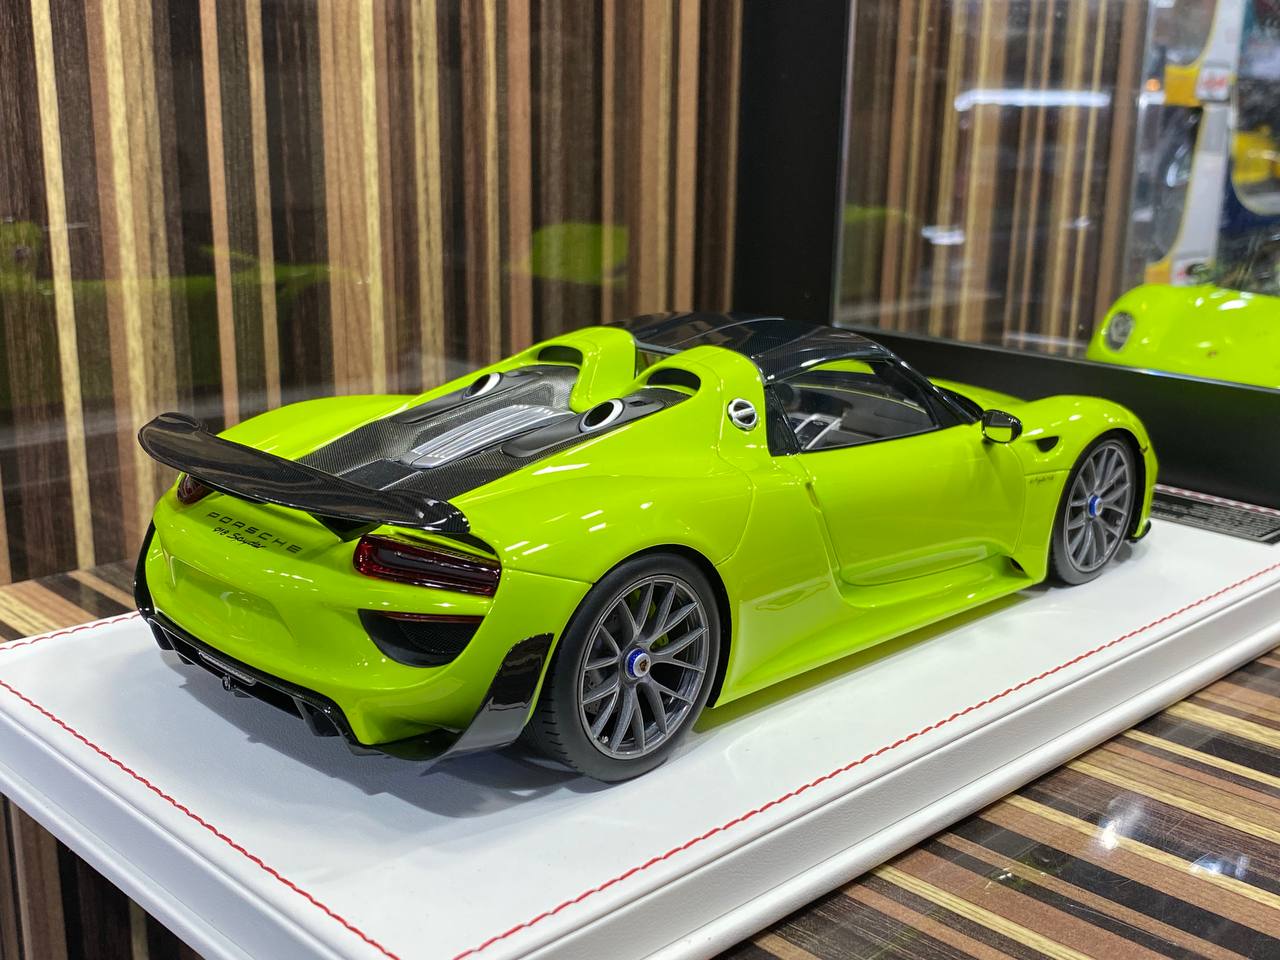 1/18 Resin Dino Porsche 918 Spyder PTS acid green Scale Model Car|Sold in Dturman.com Dubai UAE.